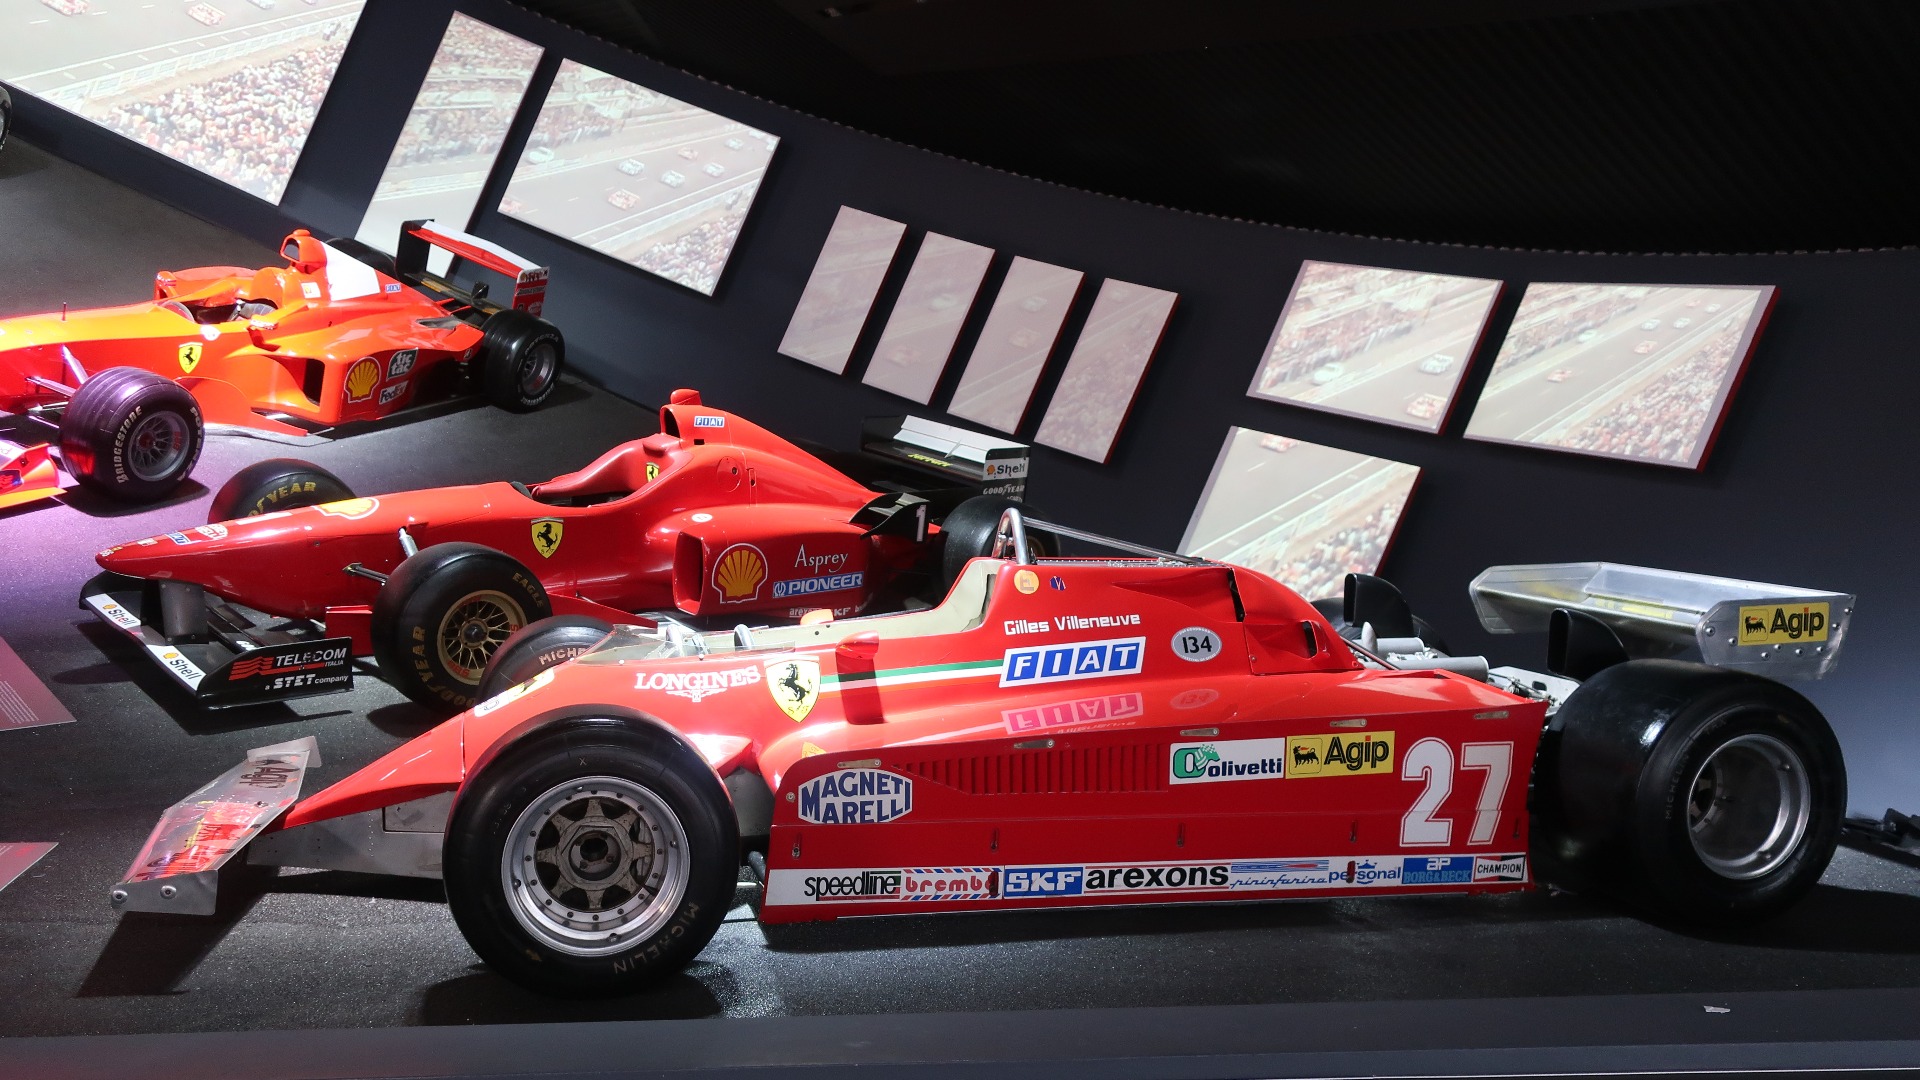 F1-biler står nede i F1-rommet, hvor den udiskutabelt mest interessante er Gilles Villeneuve sin 1981-modell.